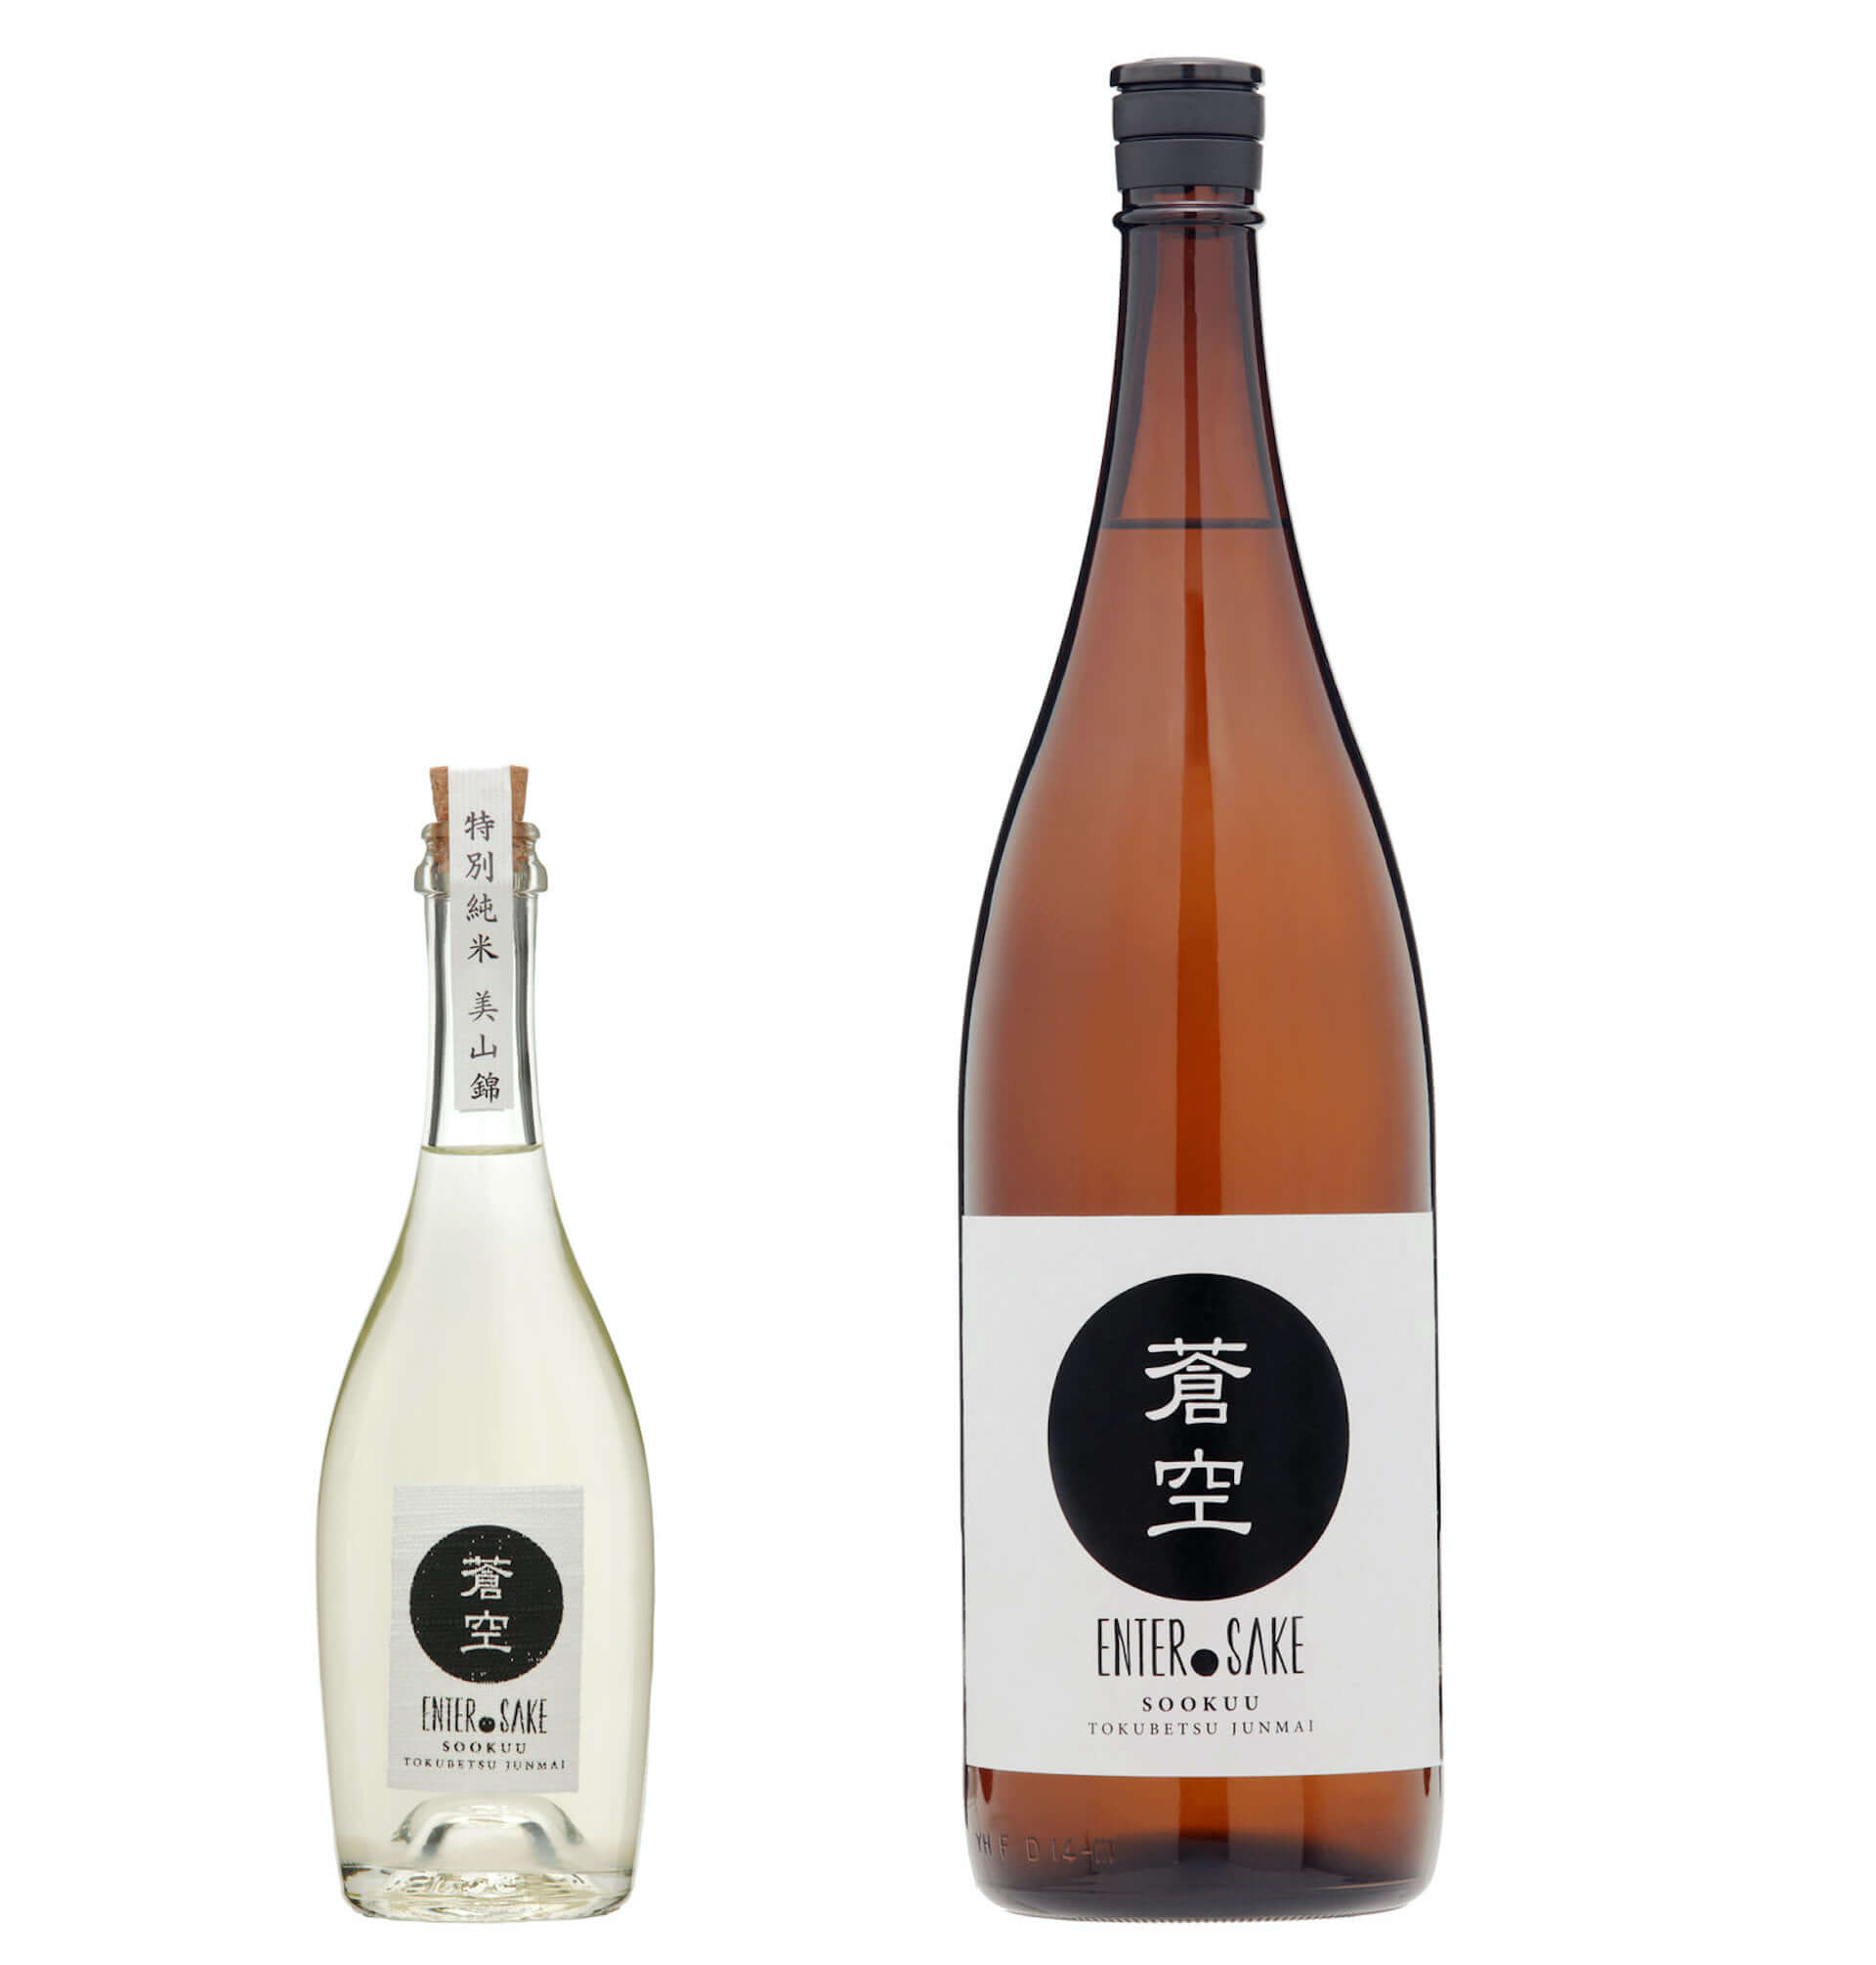 Richie Hawtinの日本酒ブランド「ENTER.Sake」から日本向け商品が初登場！DJミックスのダウンロードコード付き商品も gourmet201215_entersake_7-1920x2011